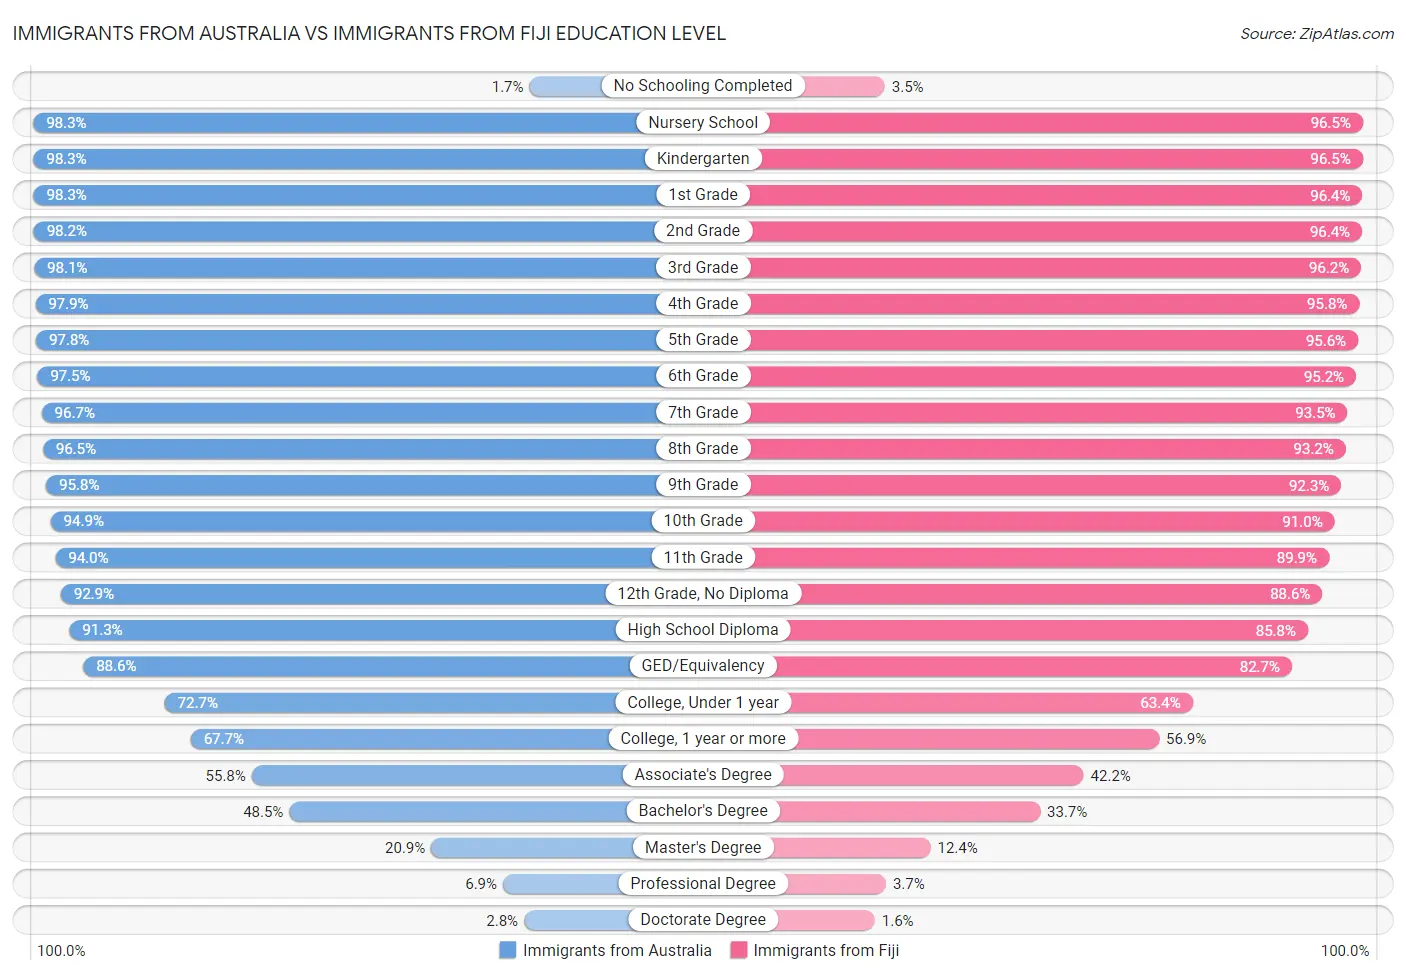 Immigrants from Australia vs Immigrants from Fiji Education Level